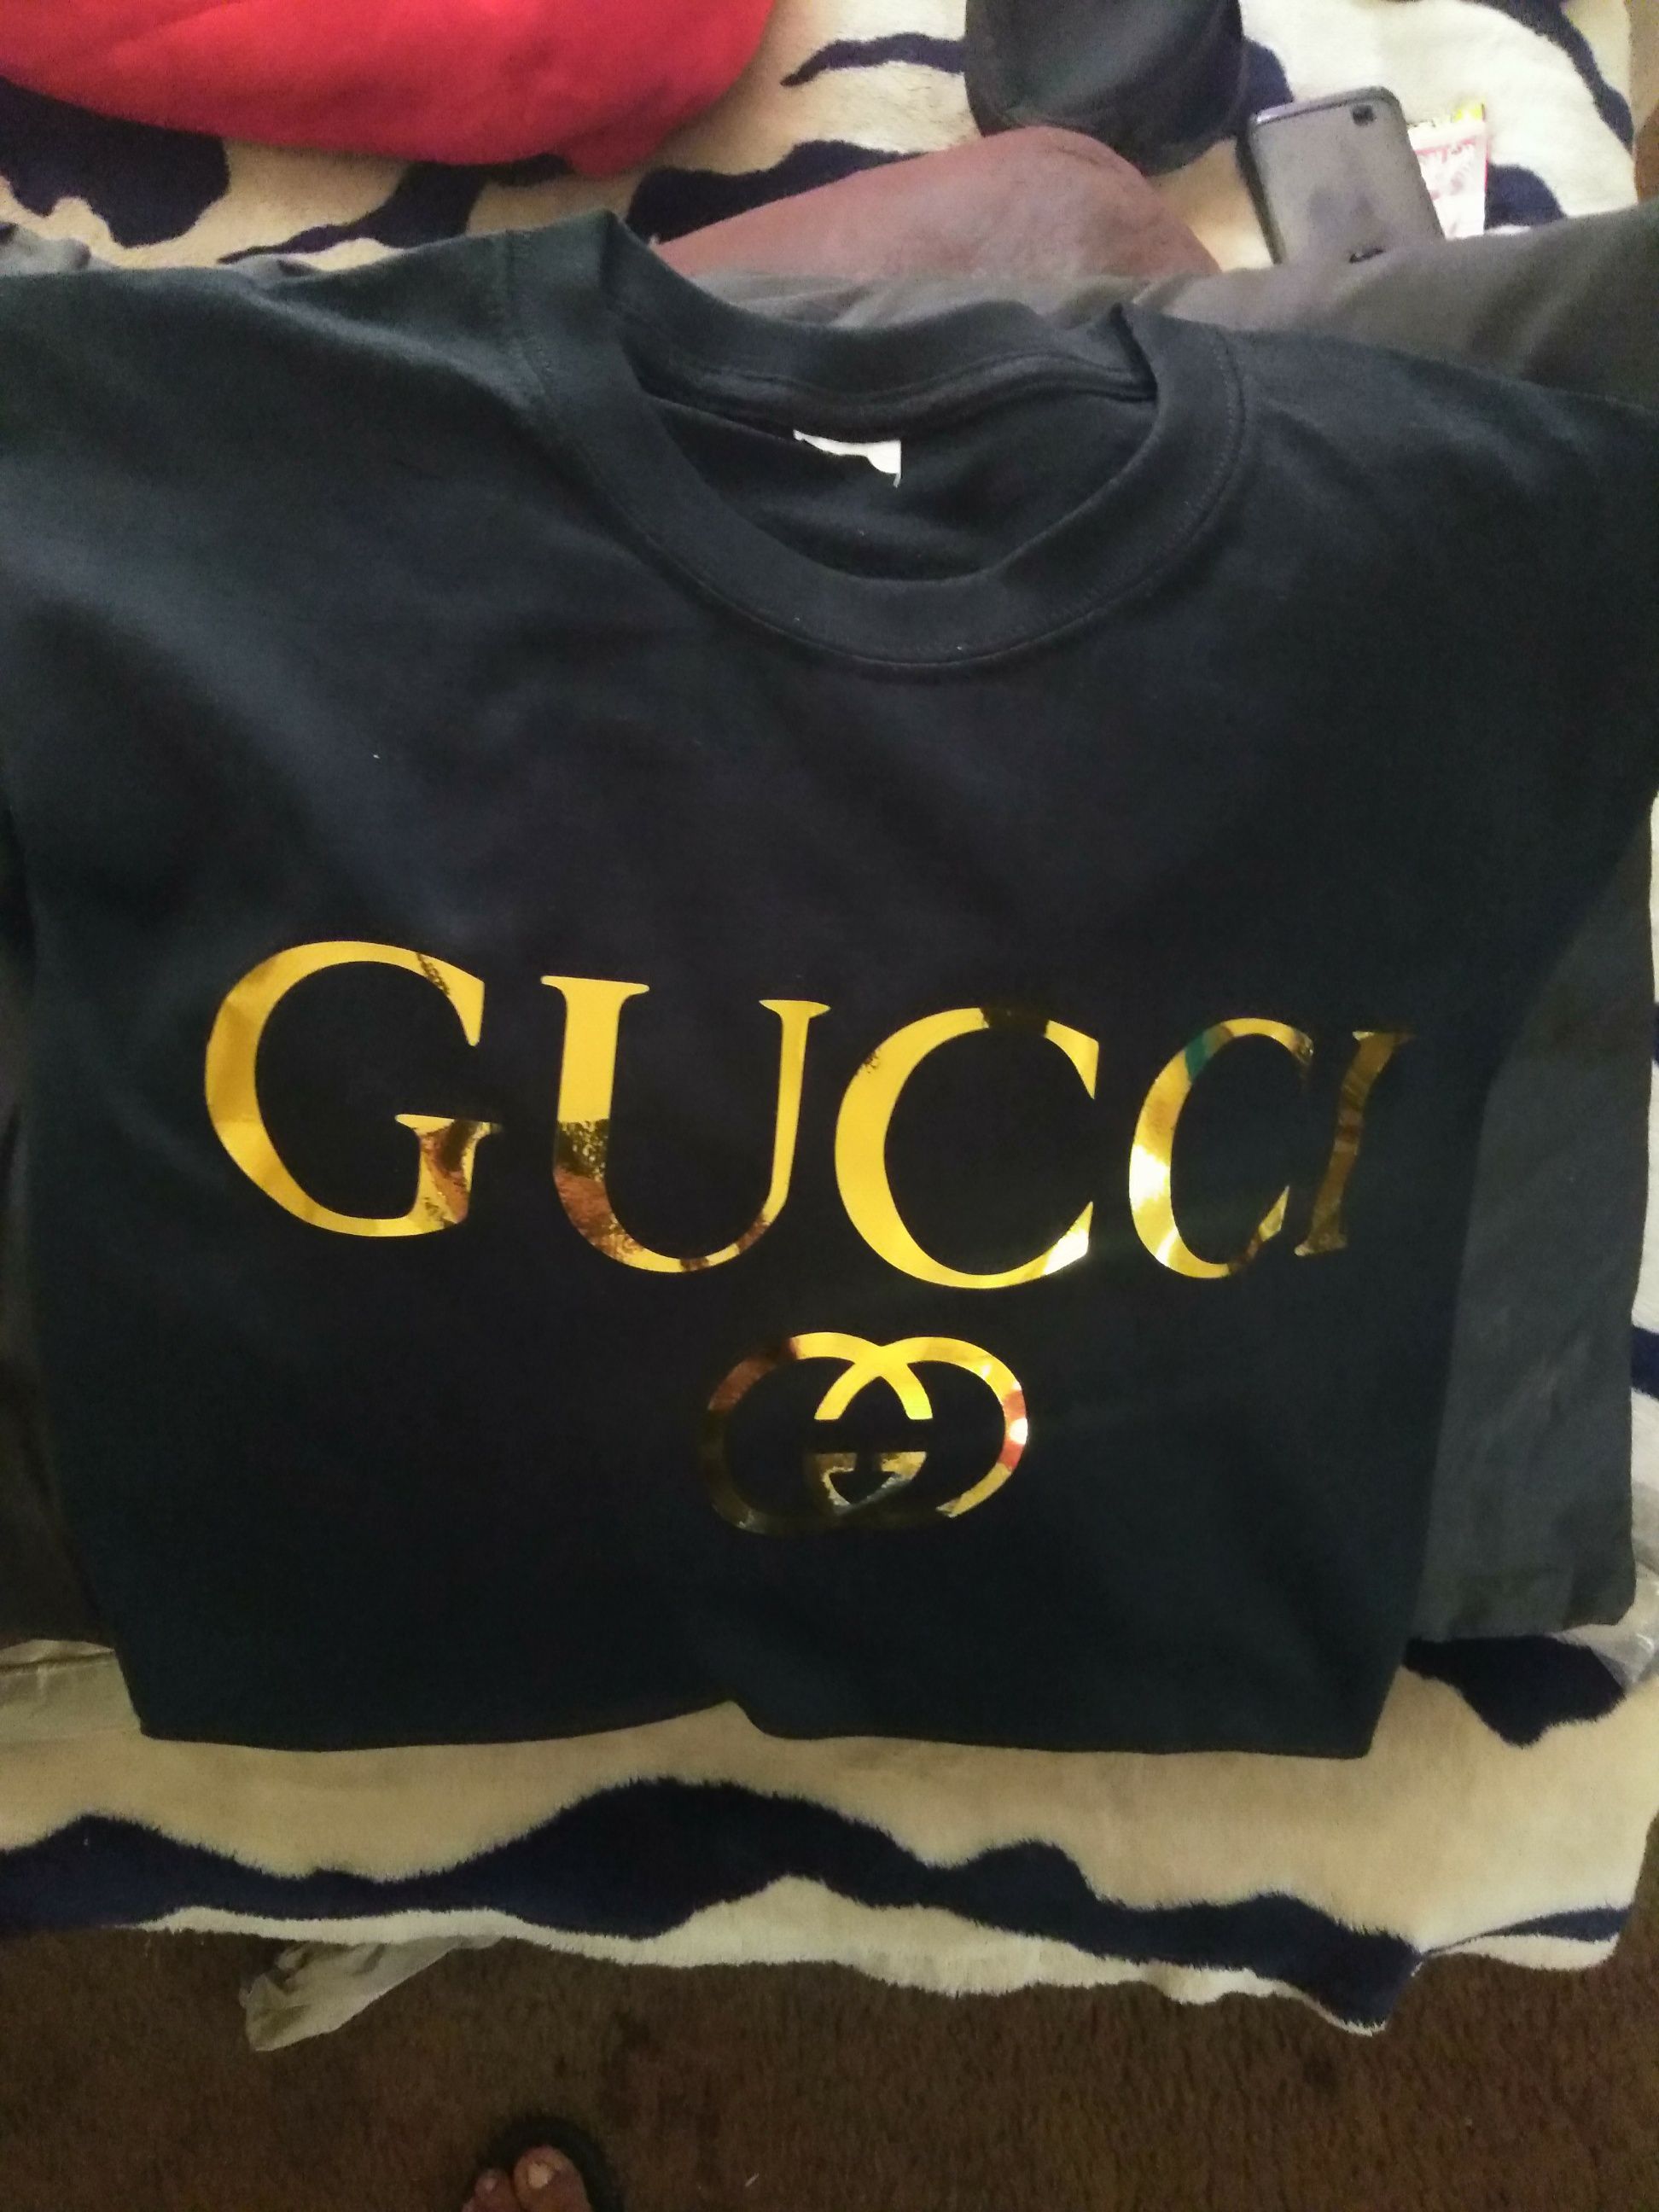 Gucci t shirt